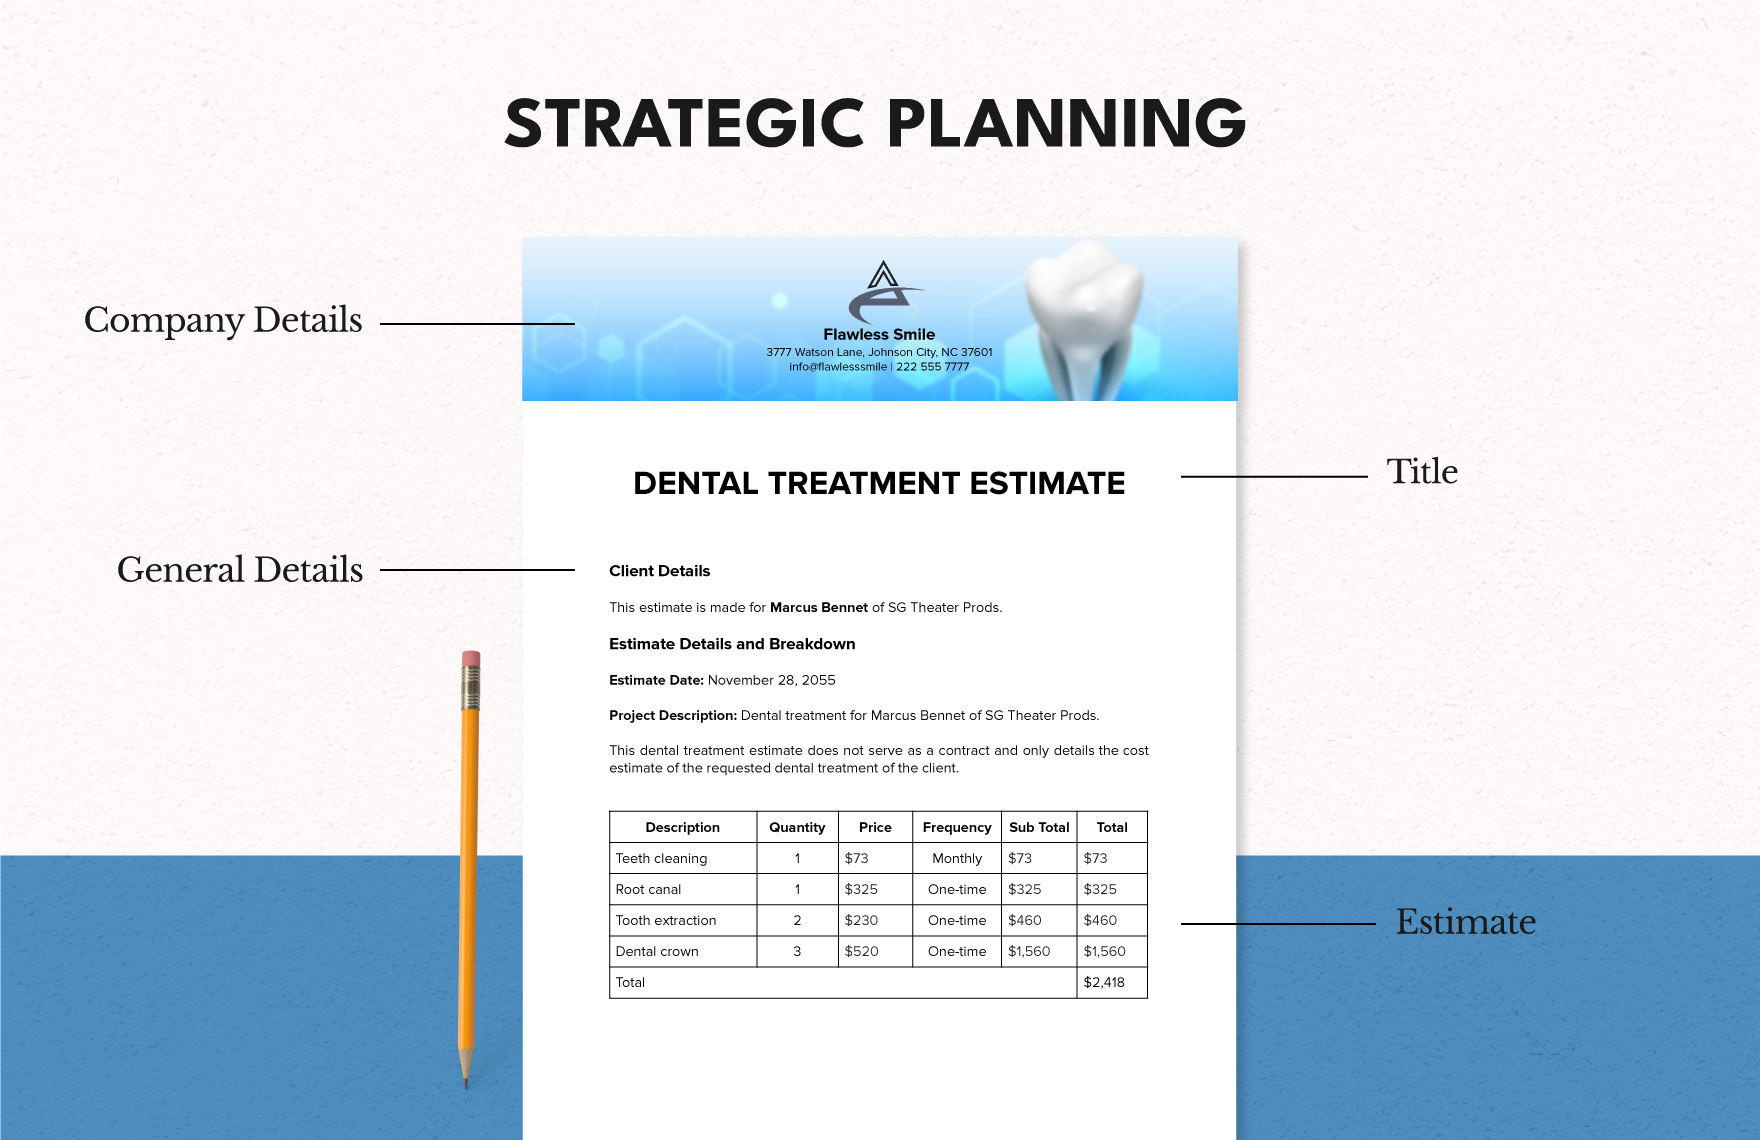 Dental Treatment Estimate Template